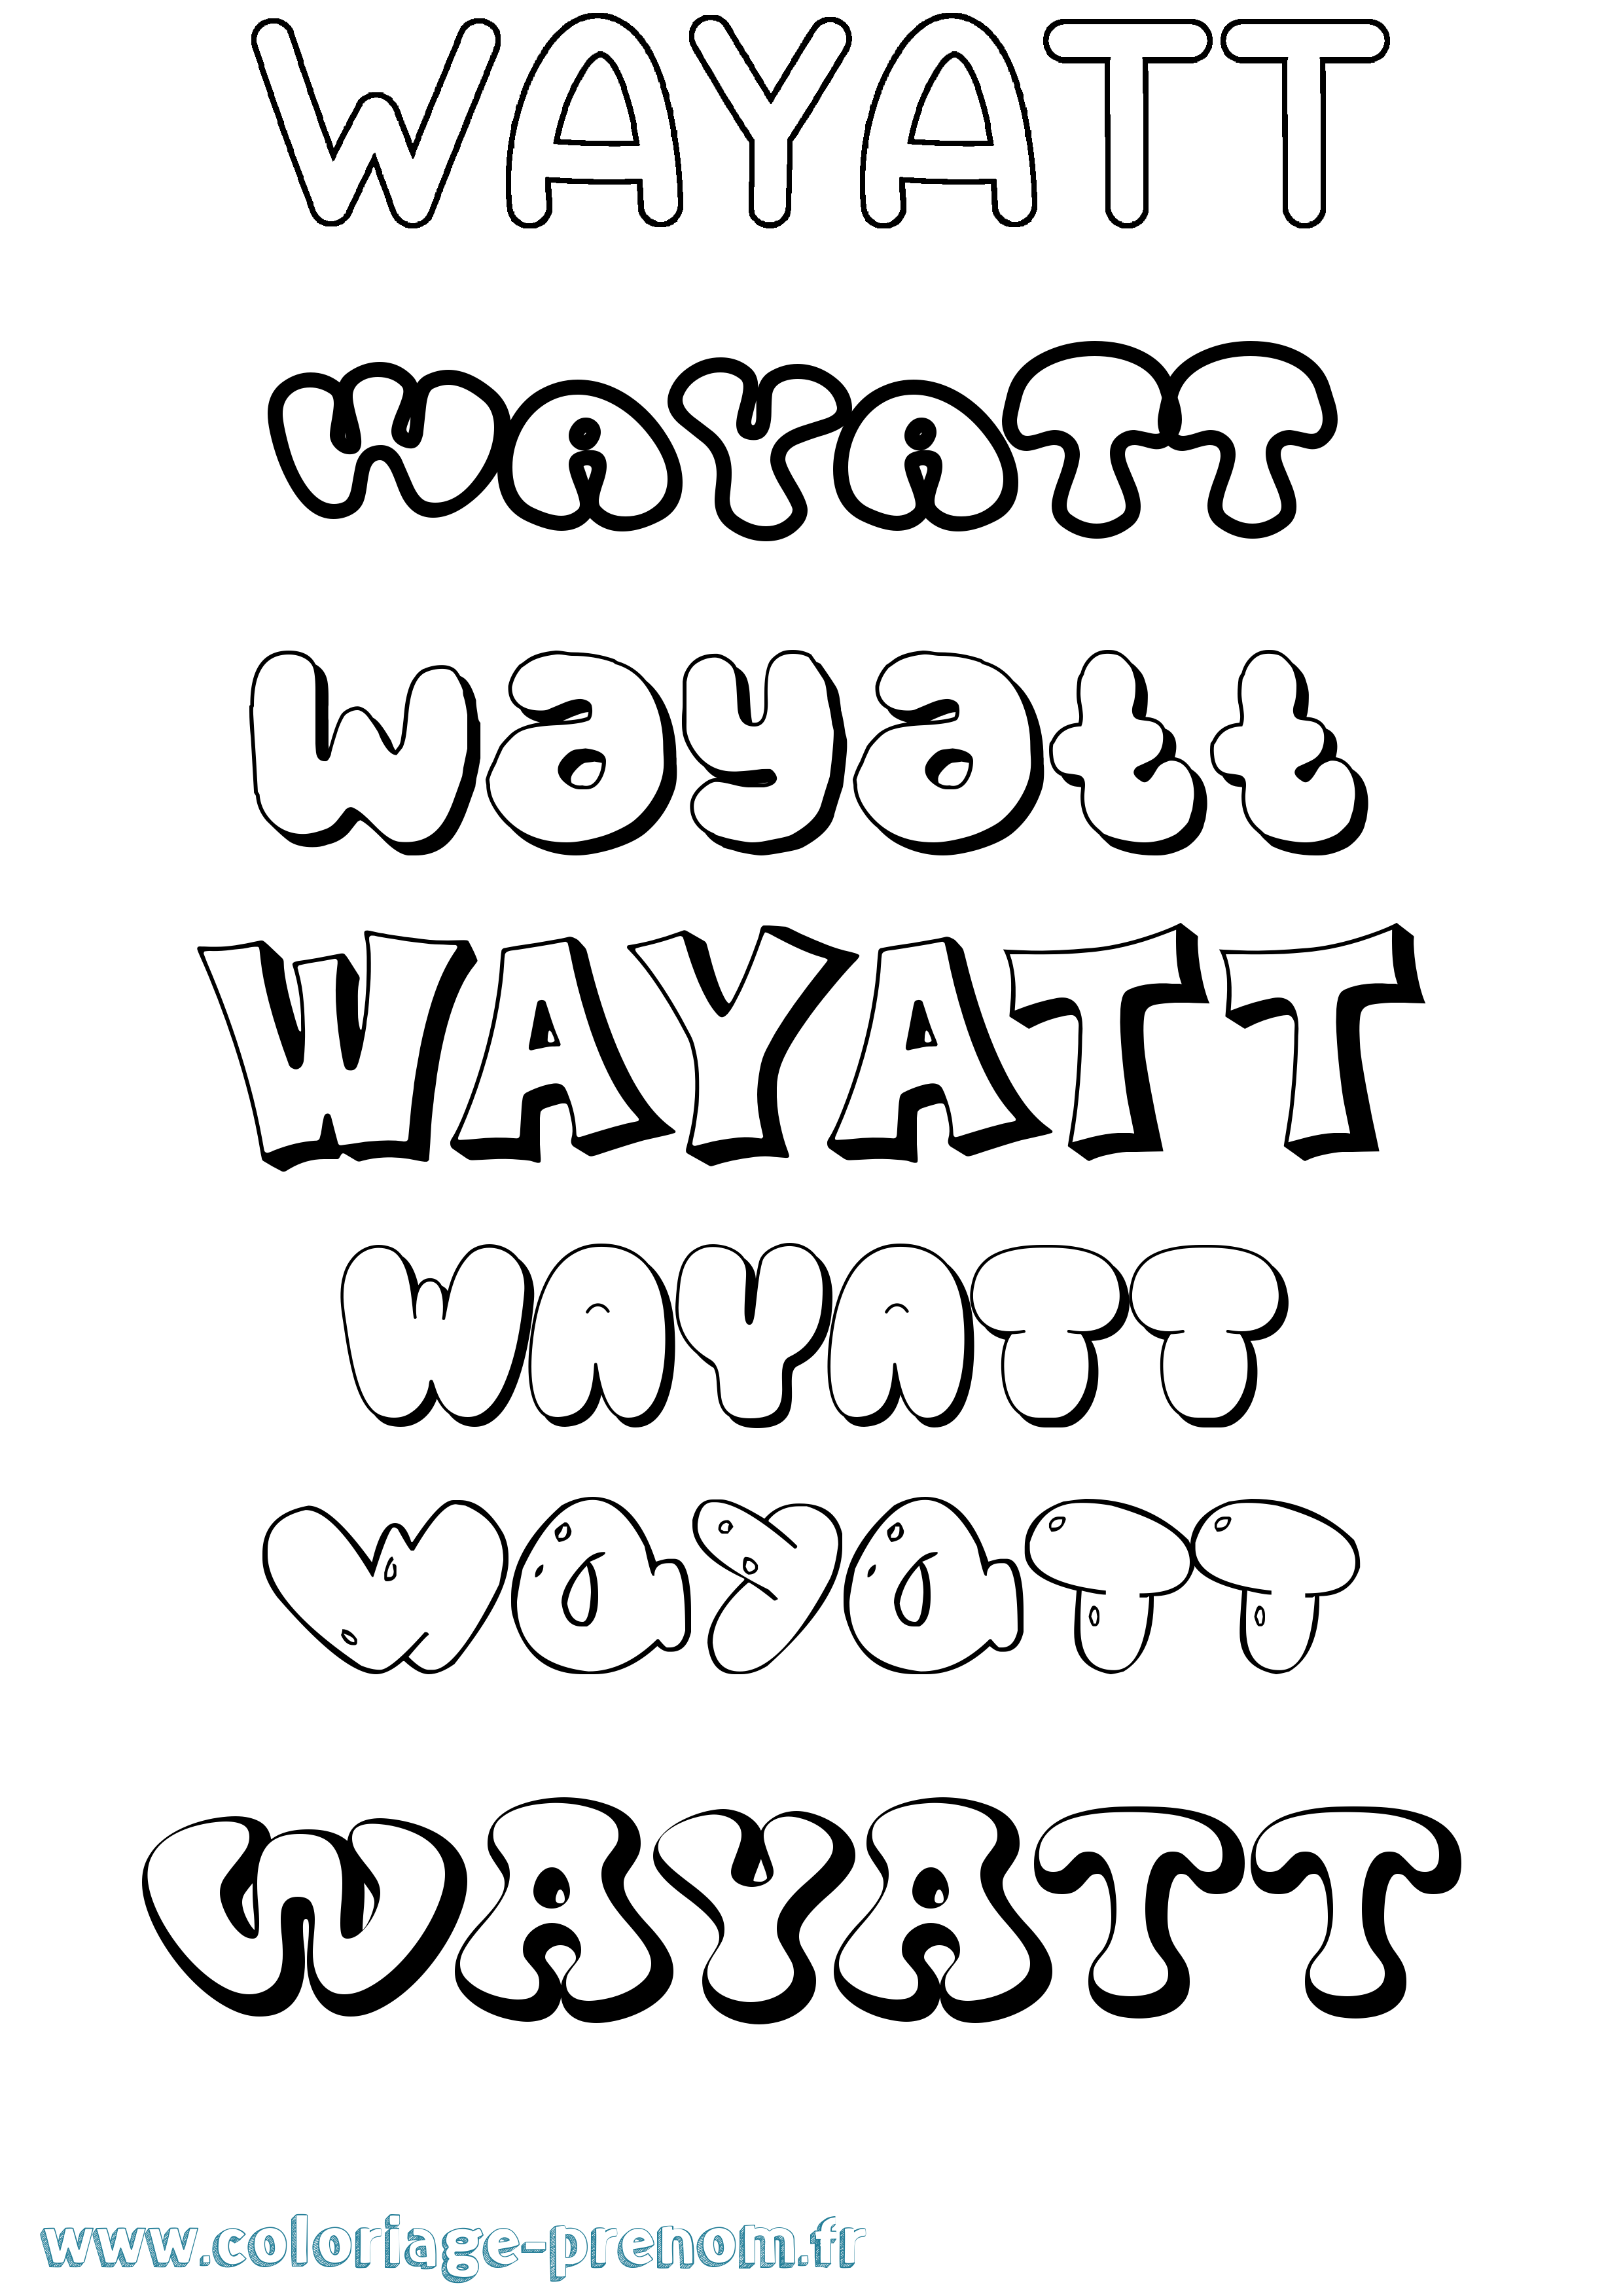 Coloriage prénom Wayatt Bubble